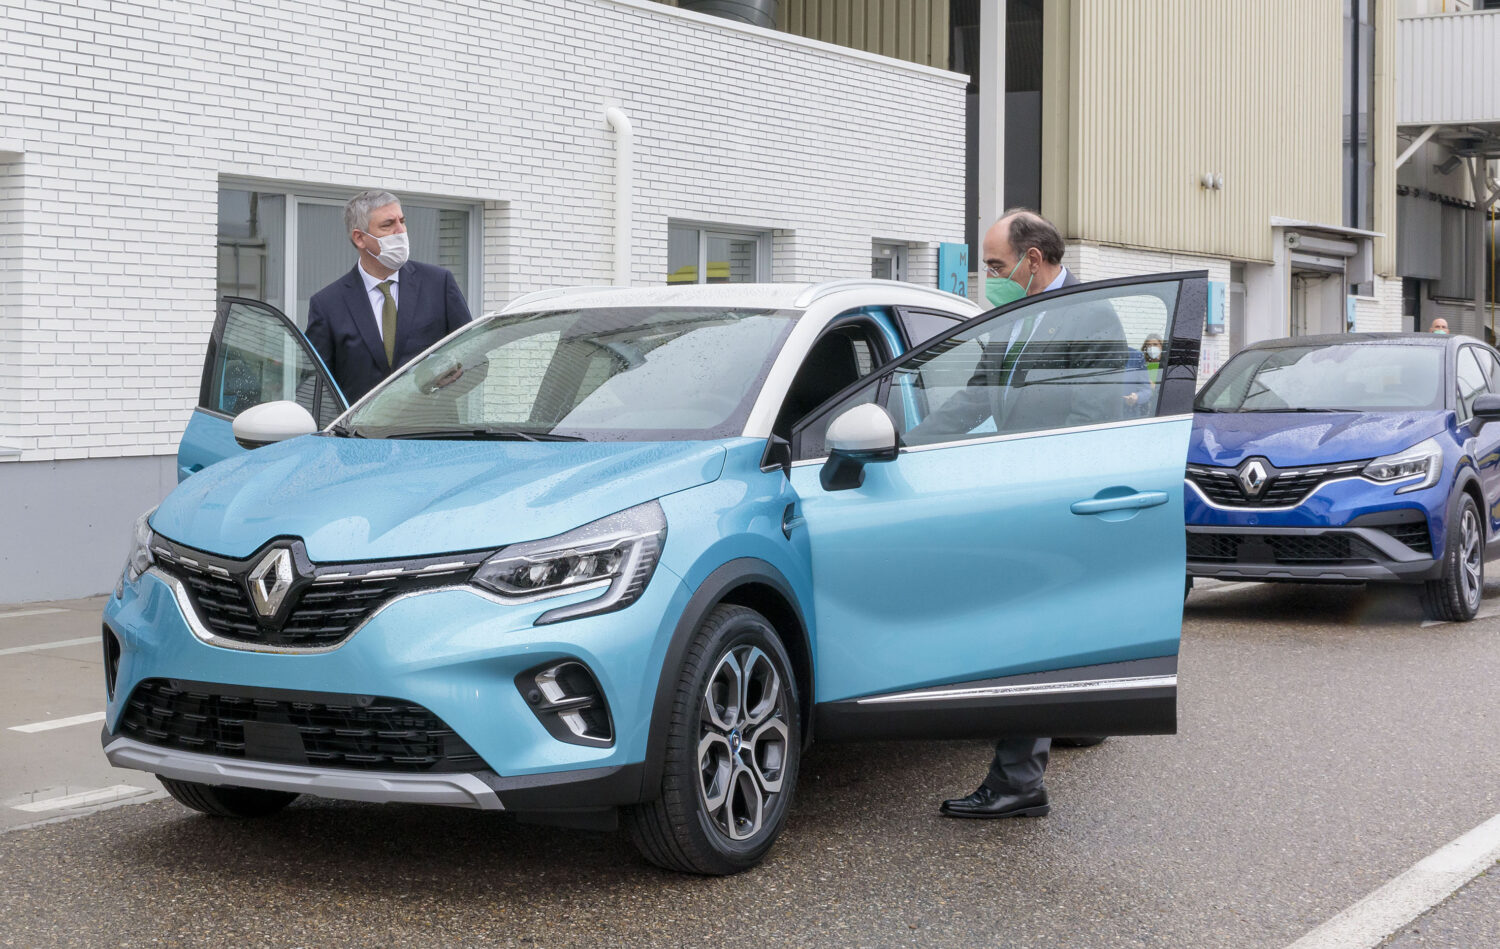 2021 - Partenariat Renault  Group et  Iberdrola